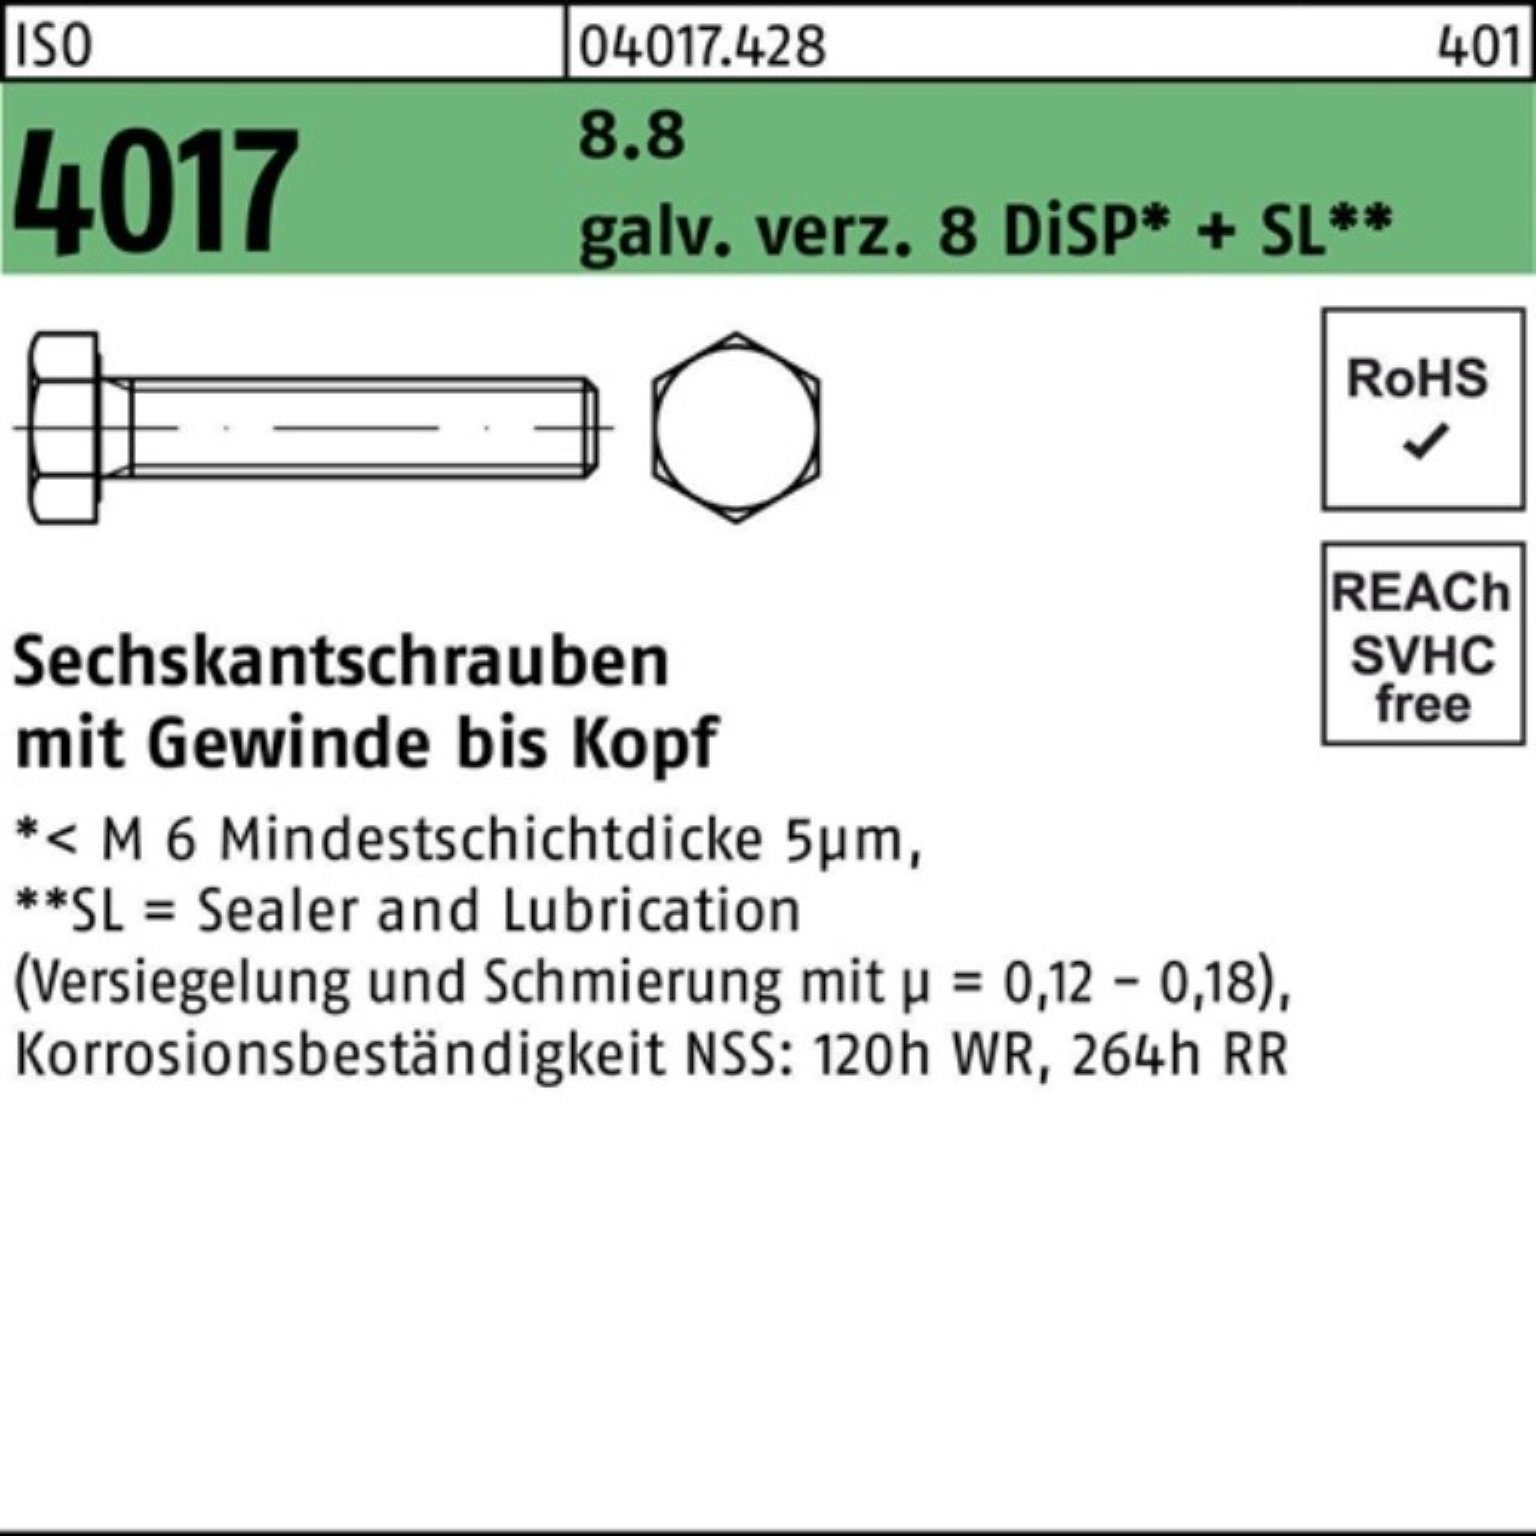 Bufab Sechskantschraube 100er Pack Sechskantschraube DiS M16x 4017 galv.verz. ISO VG 8.8 8 180